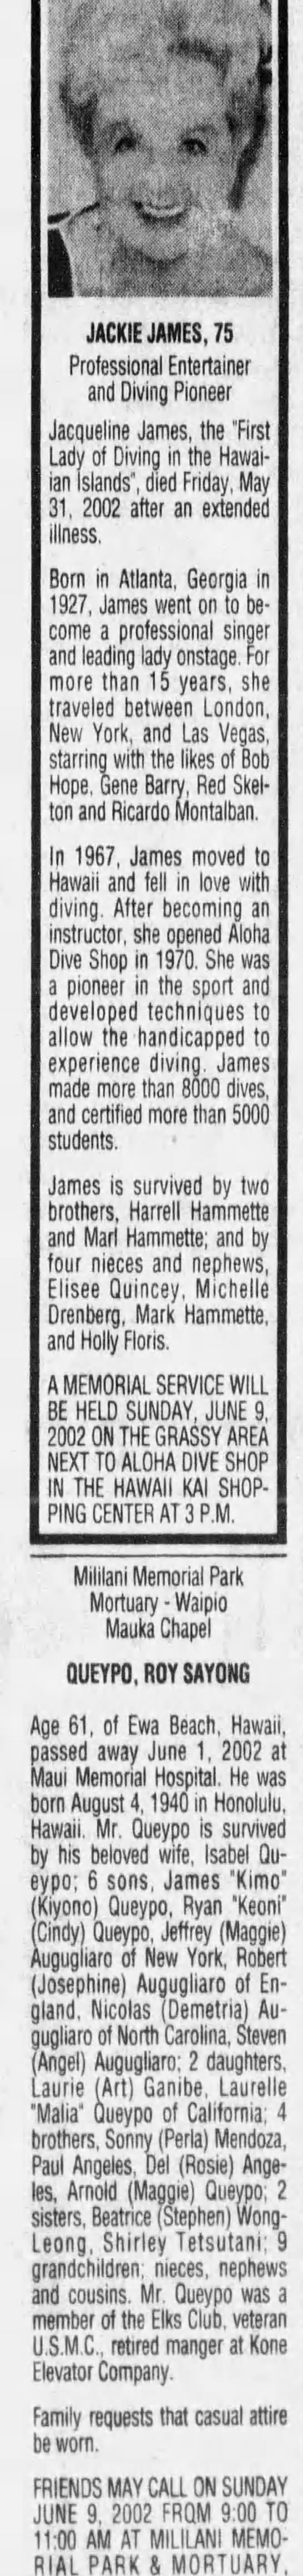 Obituary for JACKIE JAMES, 1927-2002 (Aged 61) - 